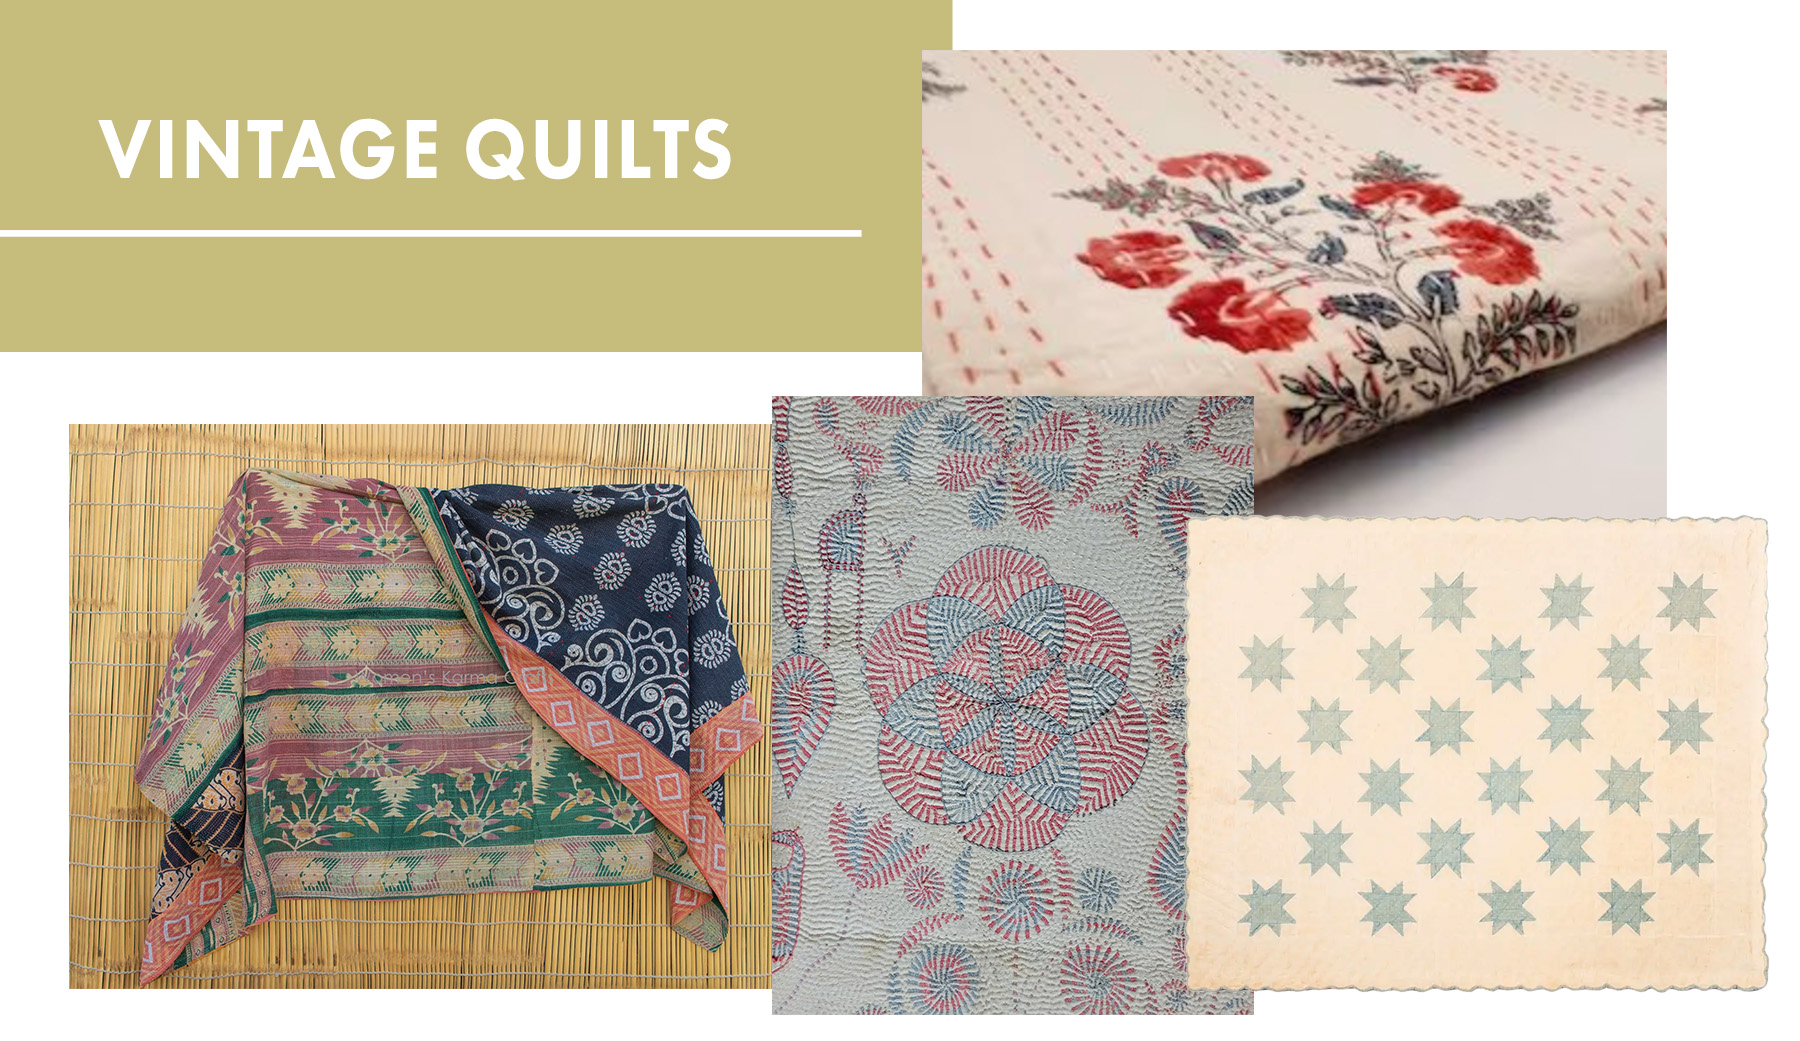 Vintage Quilts